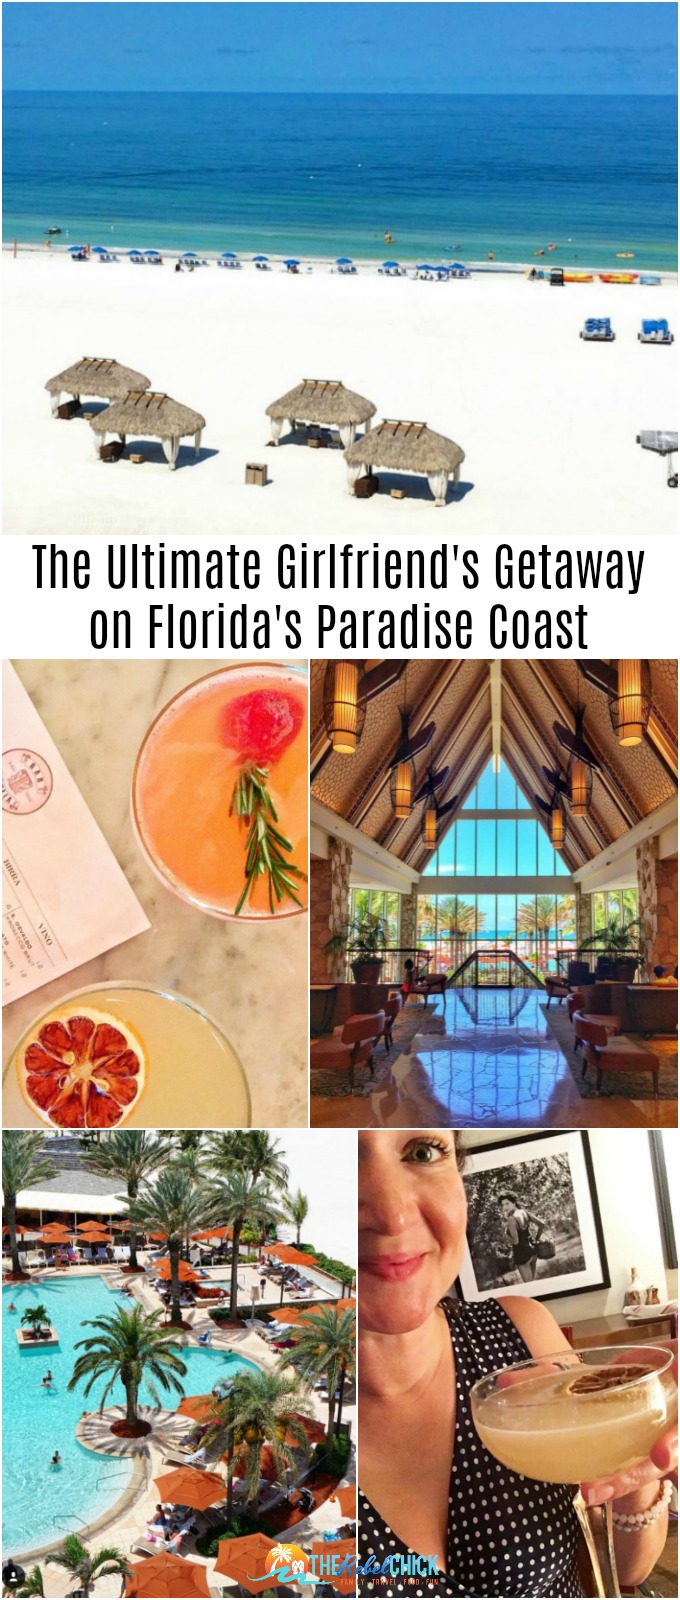 THE ULTIMATE GIRLFRIEND GETAWAY ON FLORIDA’S PARADISE COAST